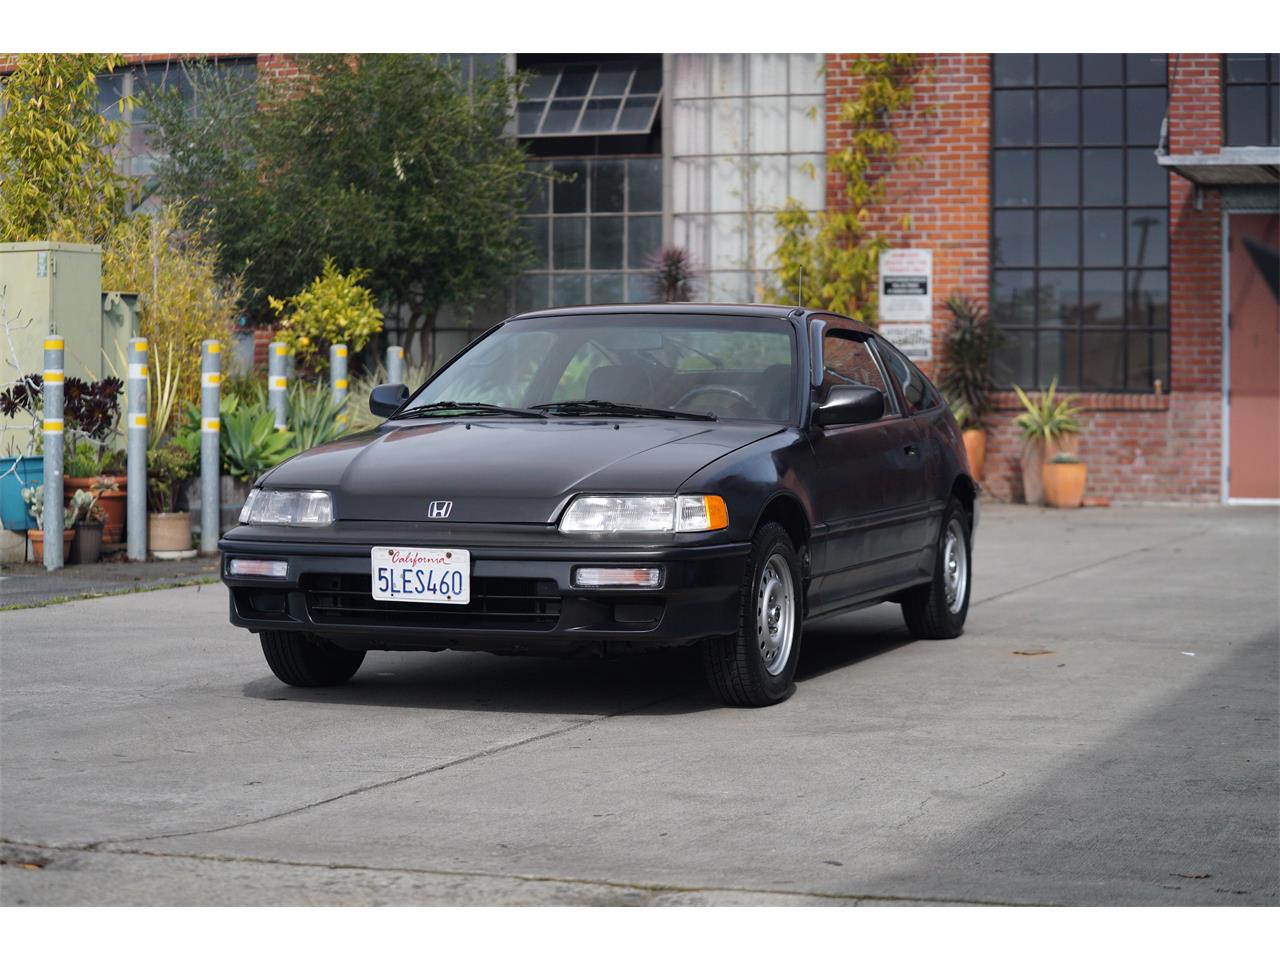 1990 Honda CRX in Oakland, California